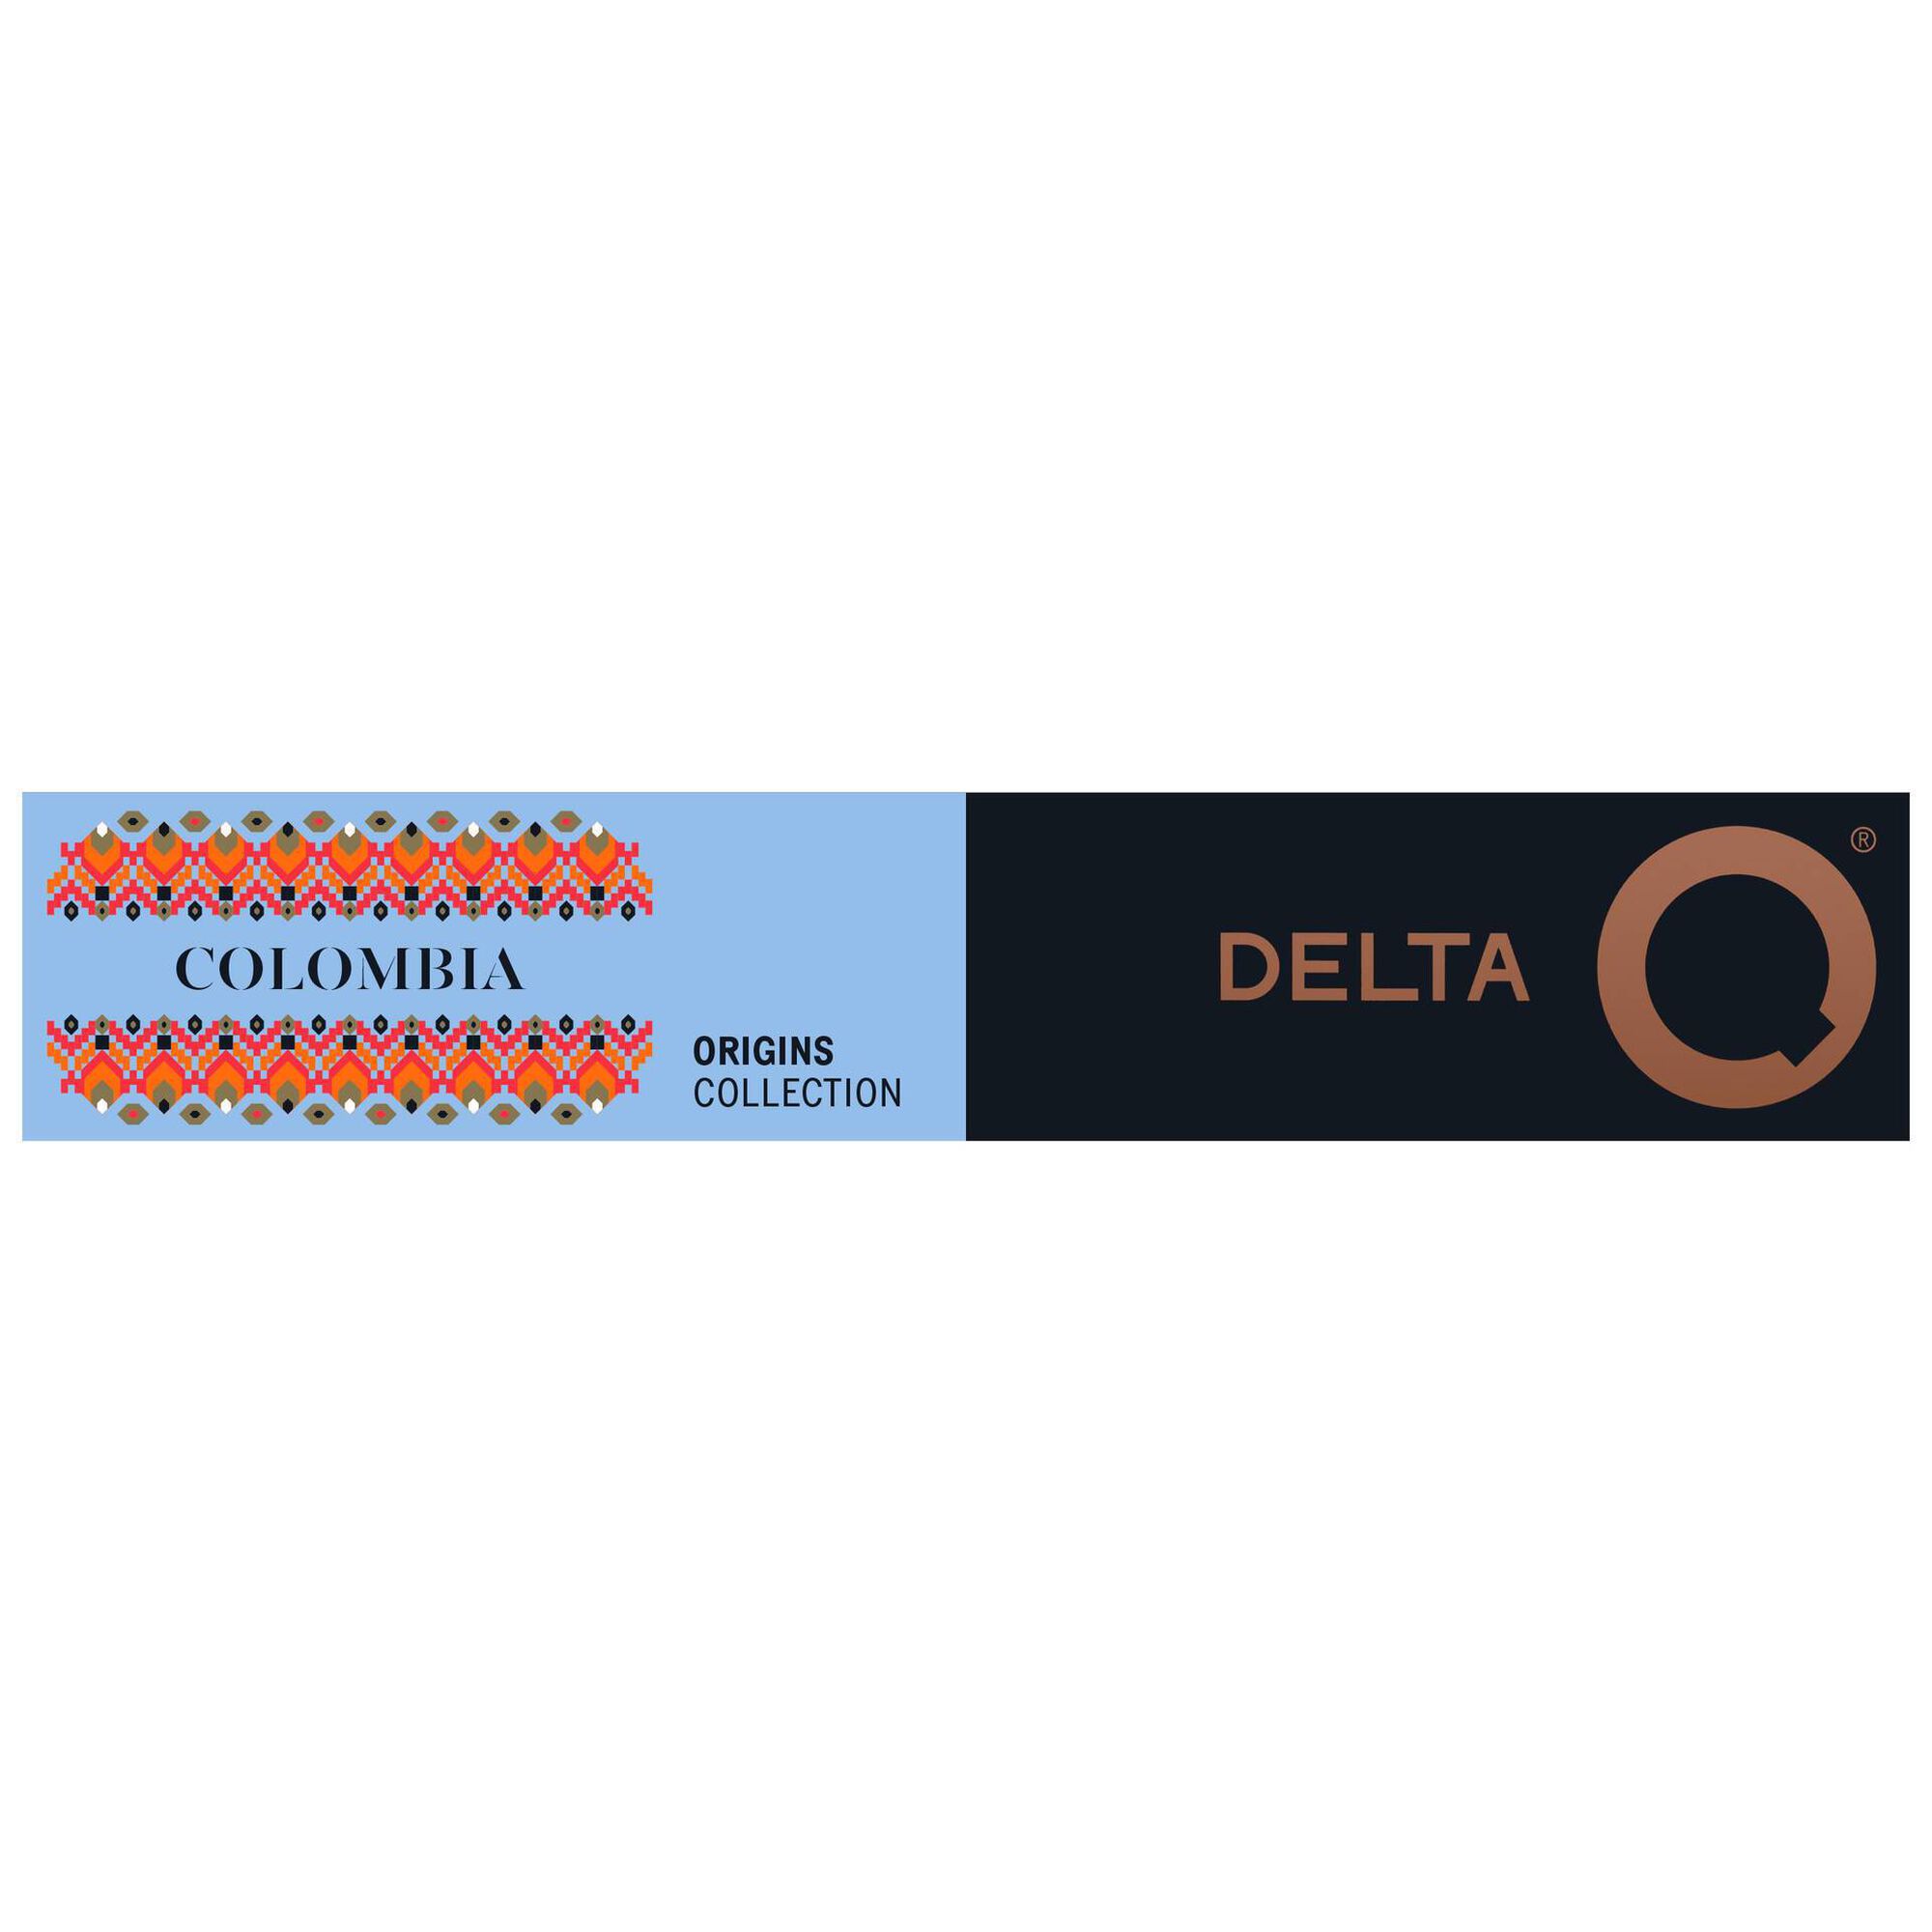 Delta Q Colombia  Tienda Online Delta Q